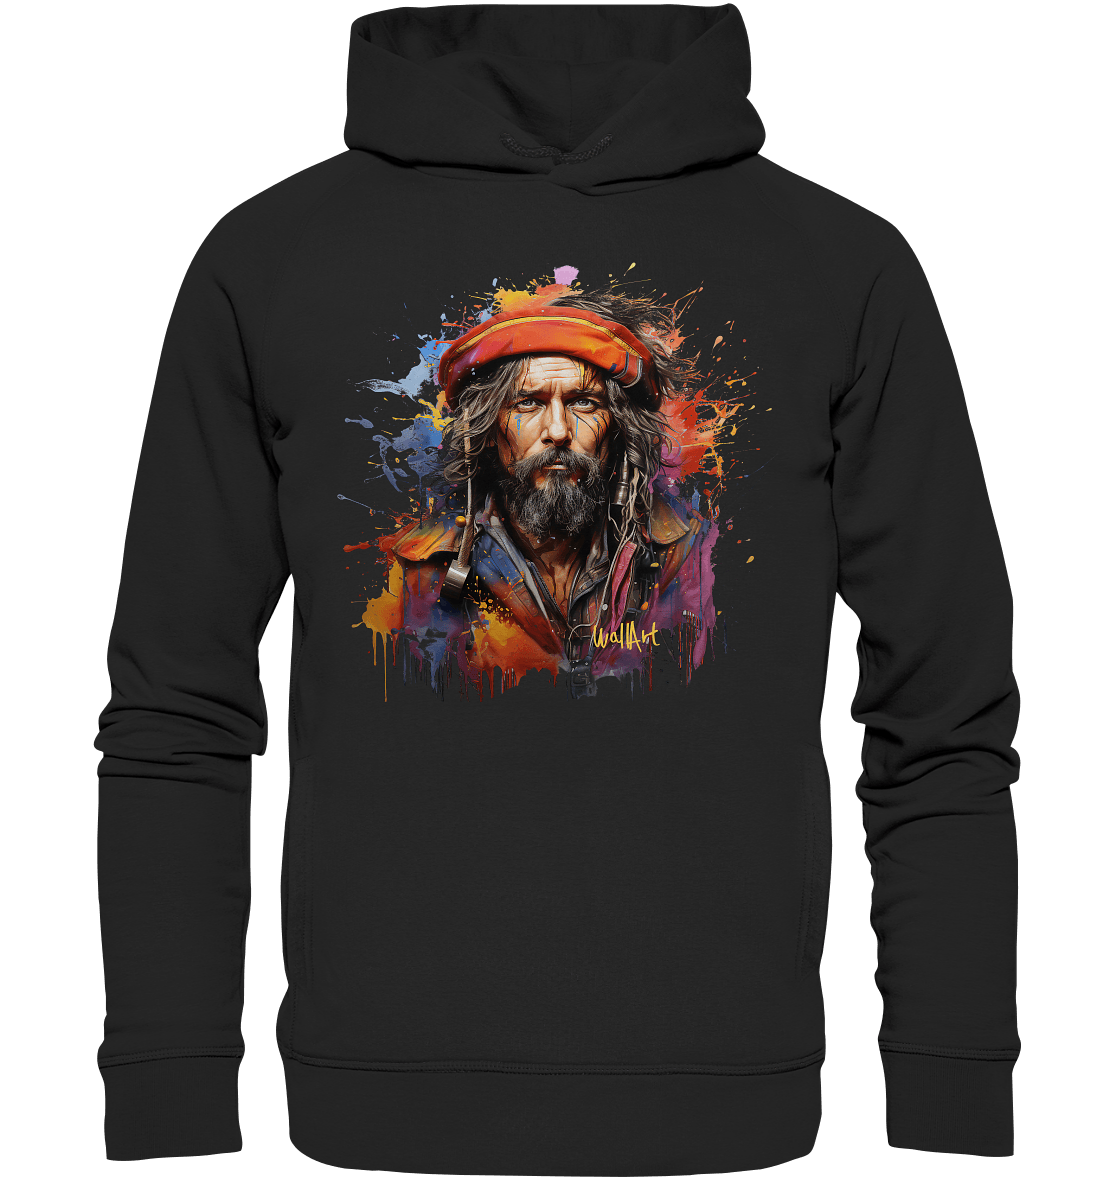 WallArt - Pelé - Pirate of my shirt - Organic Fashion Hoodie - Snapshirts